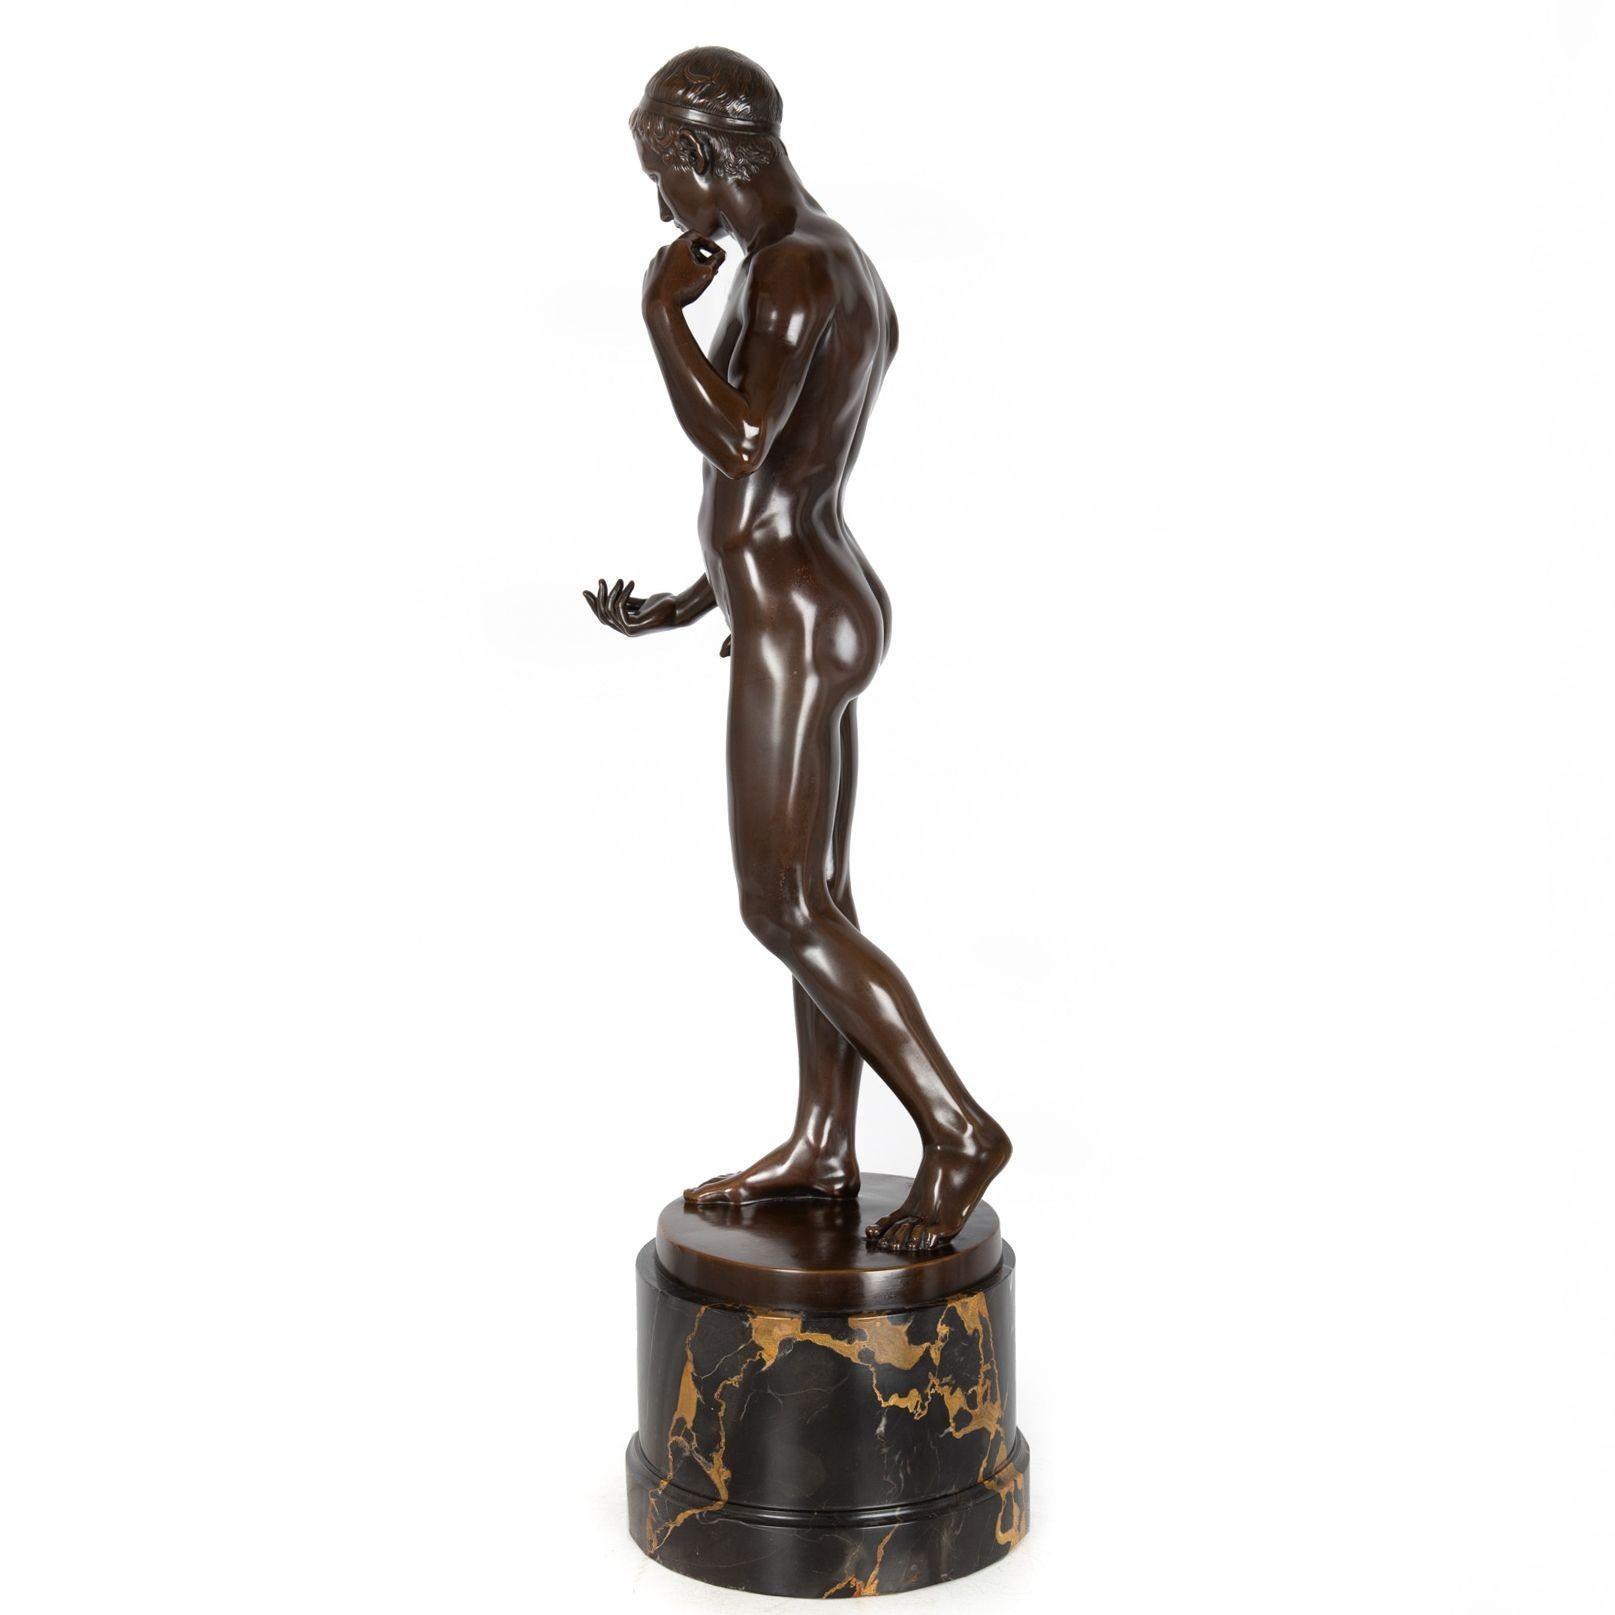 Austrian Rare Antique Bronze Sculpture of “Adam” (1911) by Charles Samuel